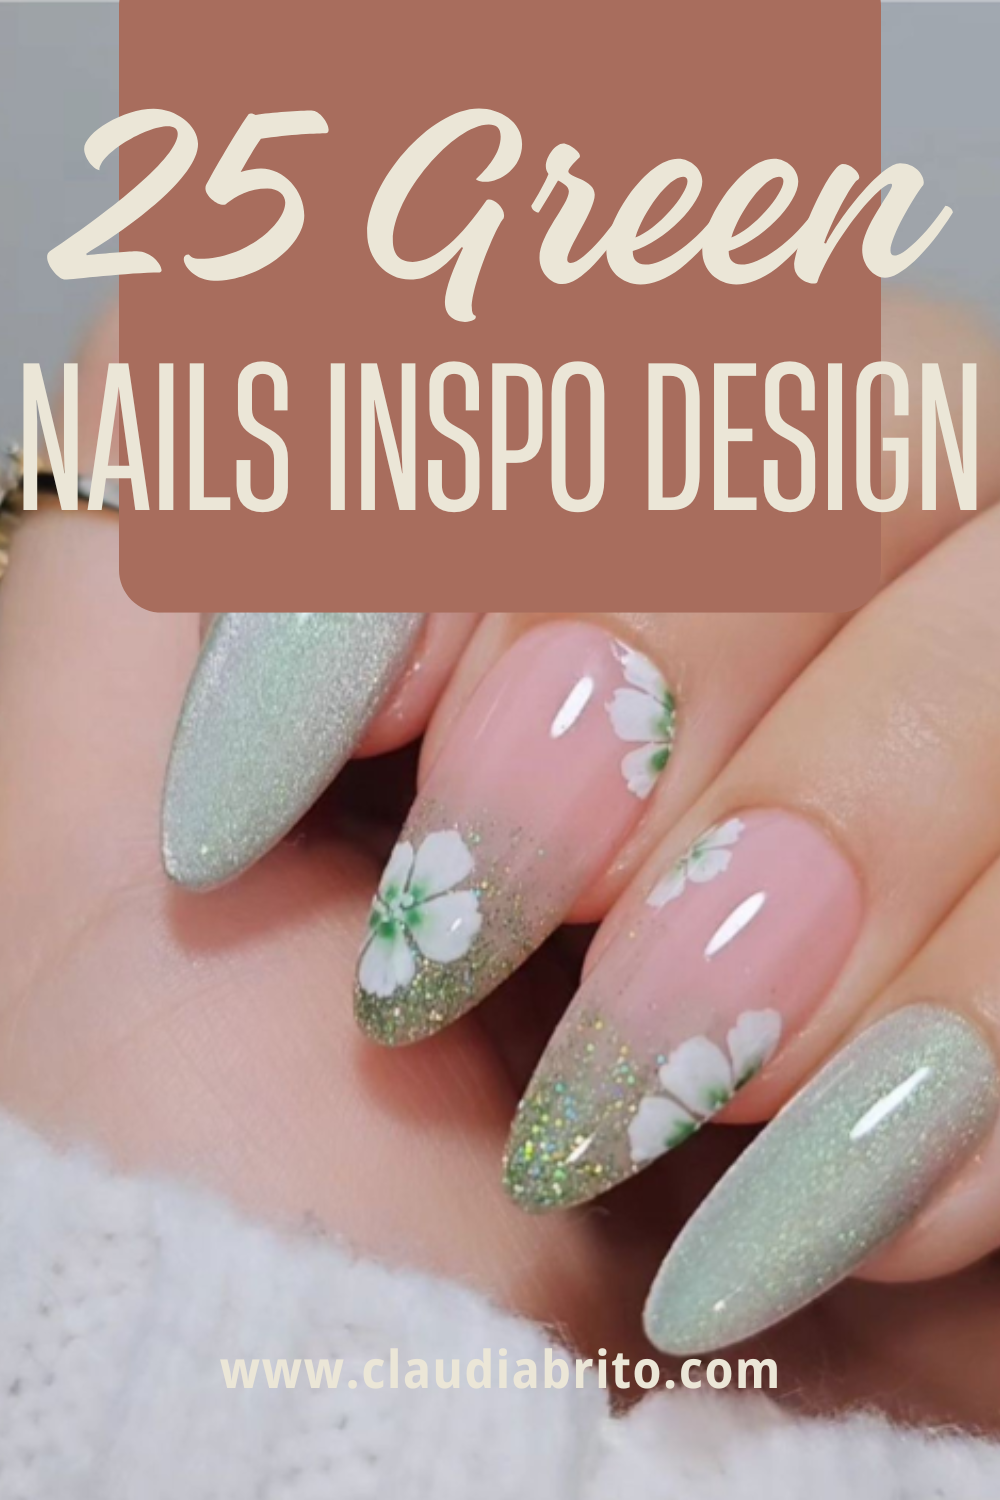 25 Green Nails Inspo Design